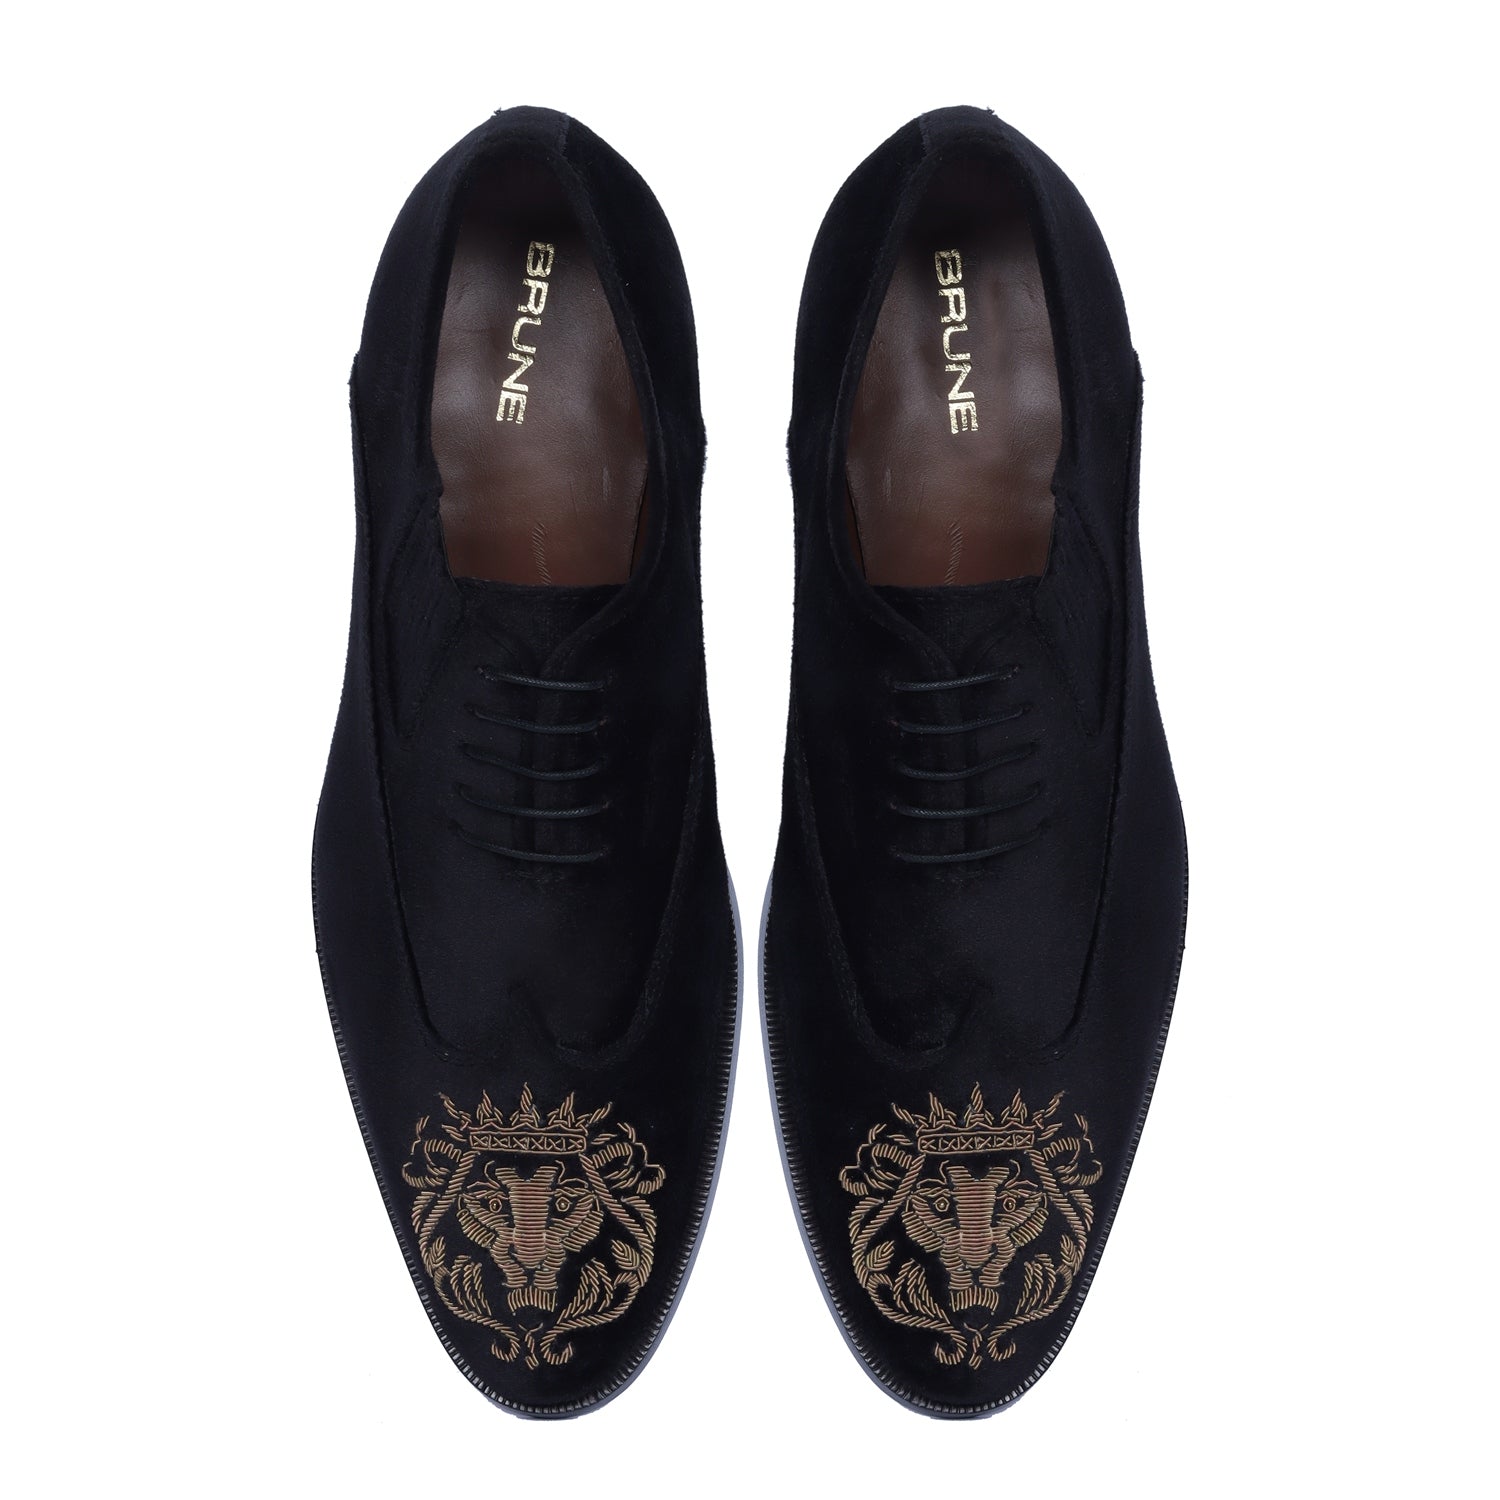 Black Velvet Lace-Up Formal Shoes with Zardosi Lion For Men By Brune & Bareskin